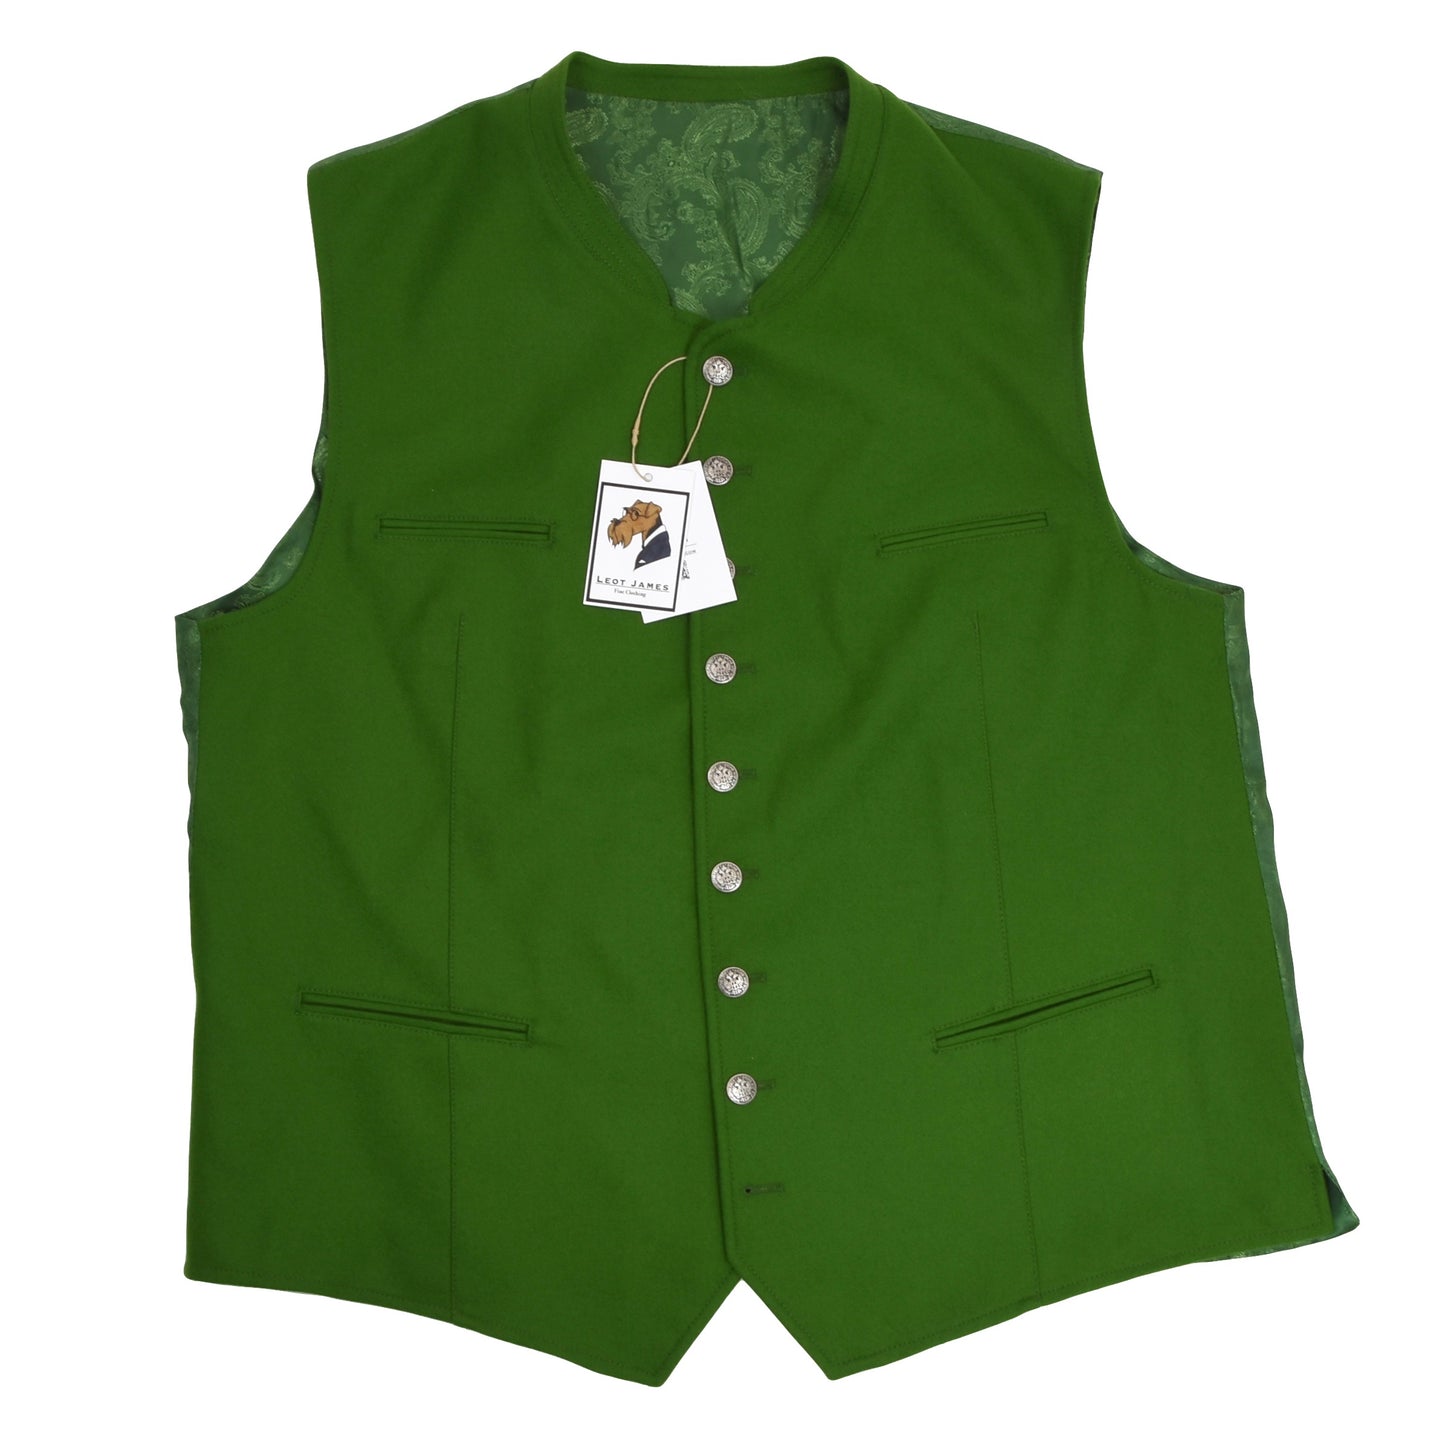 Alpina Wool Trachtenweste Size 60 - Moss Green